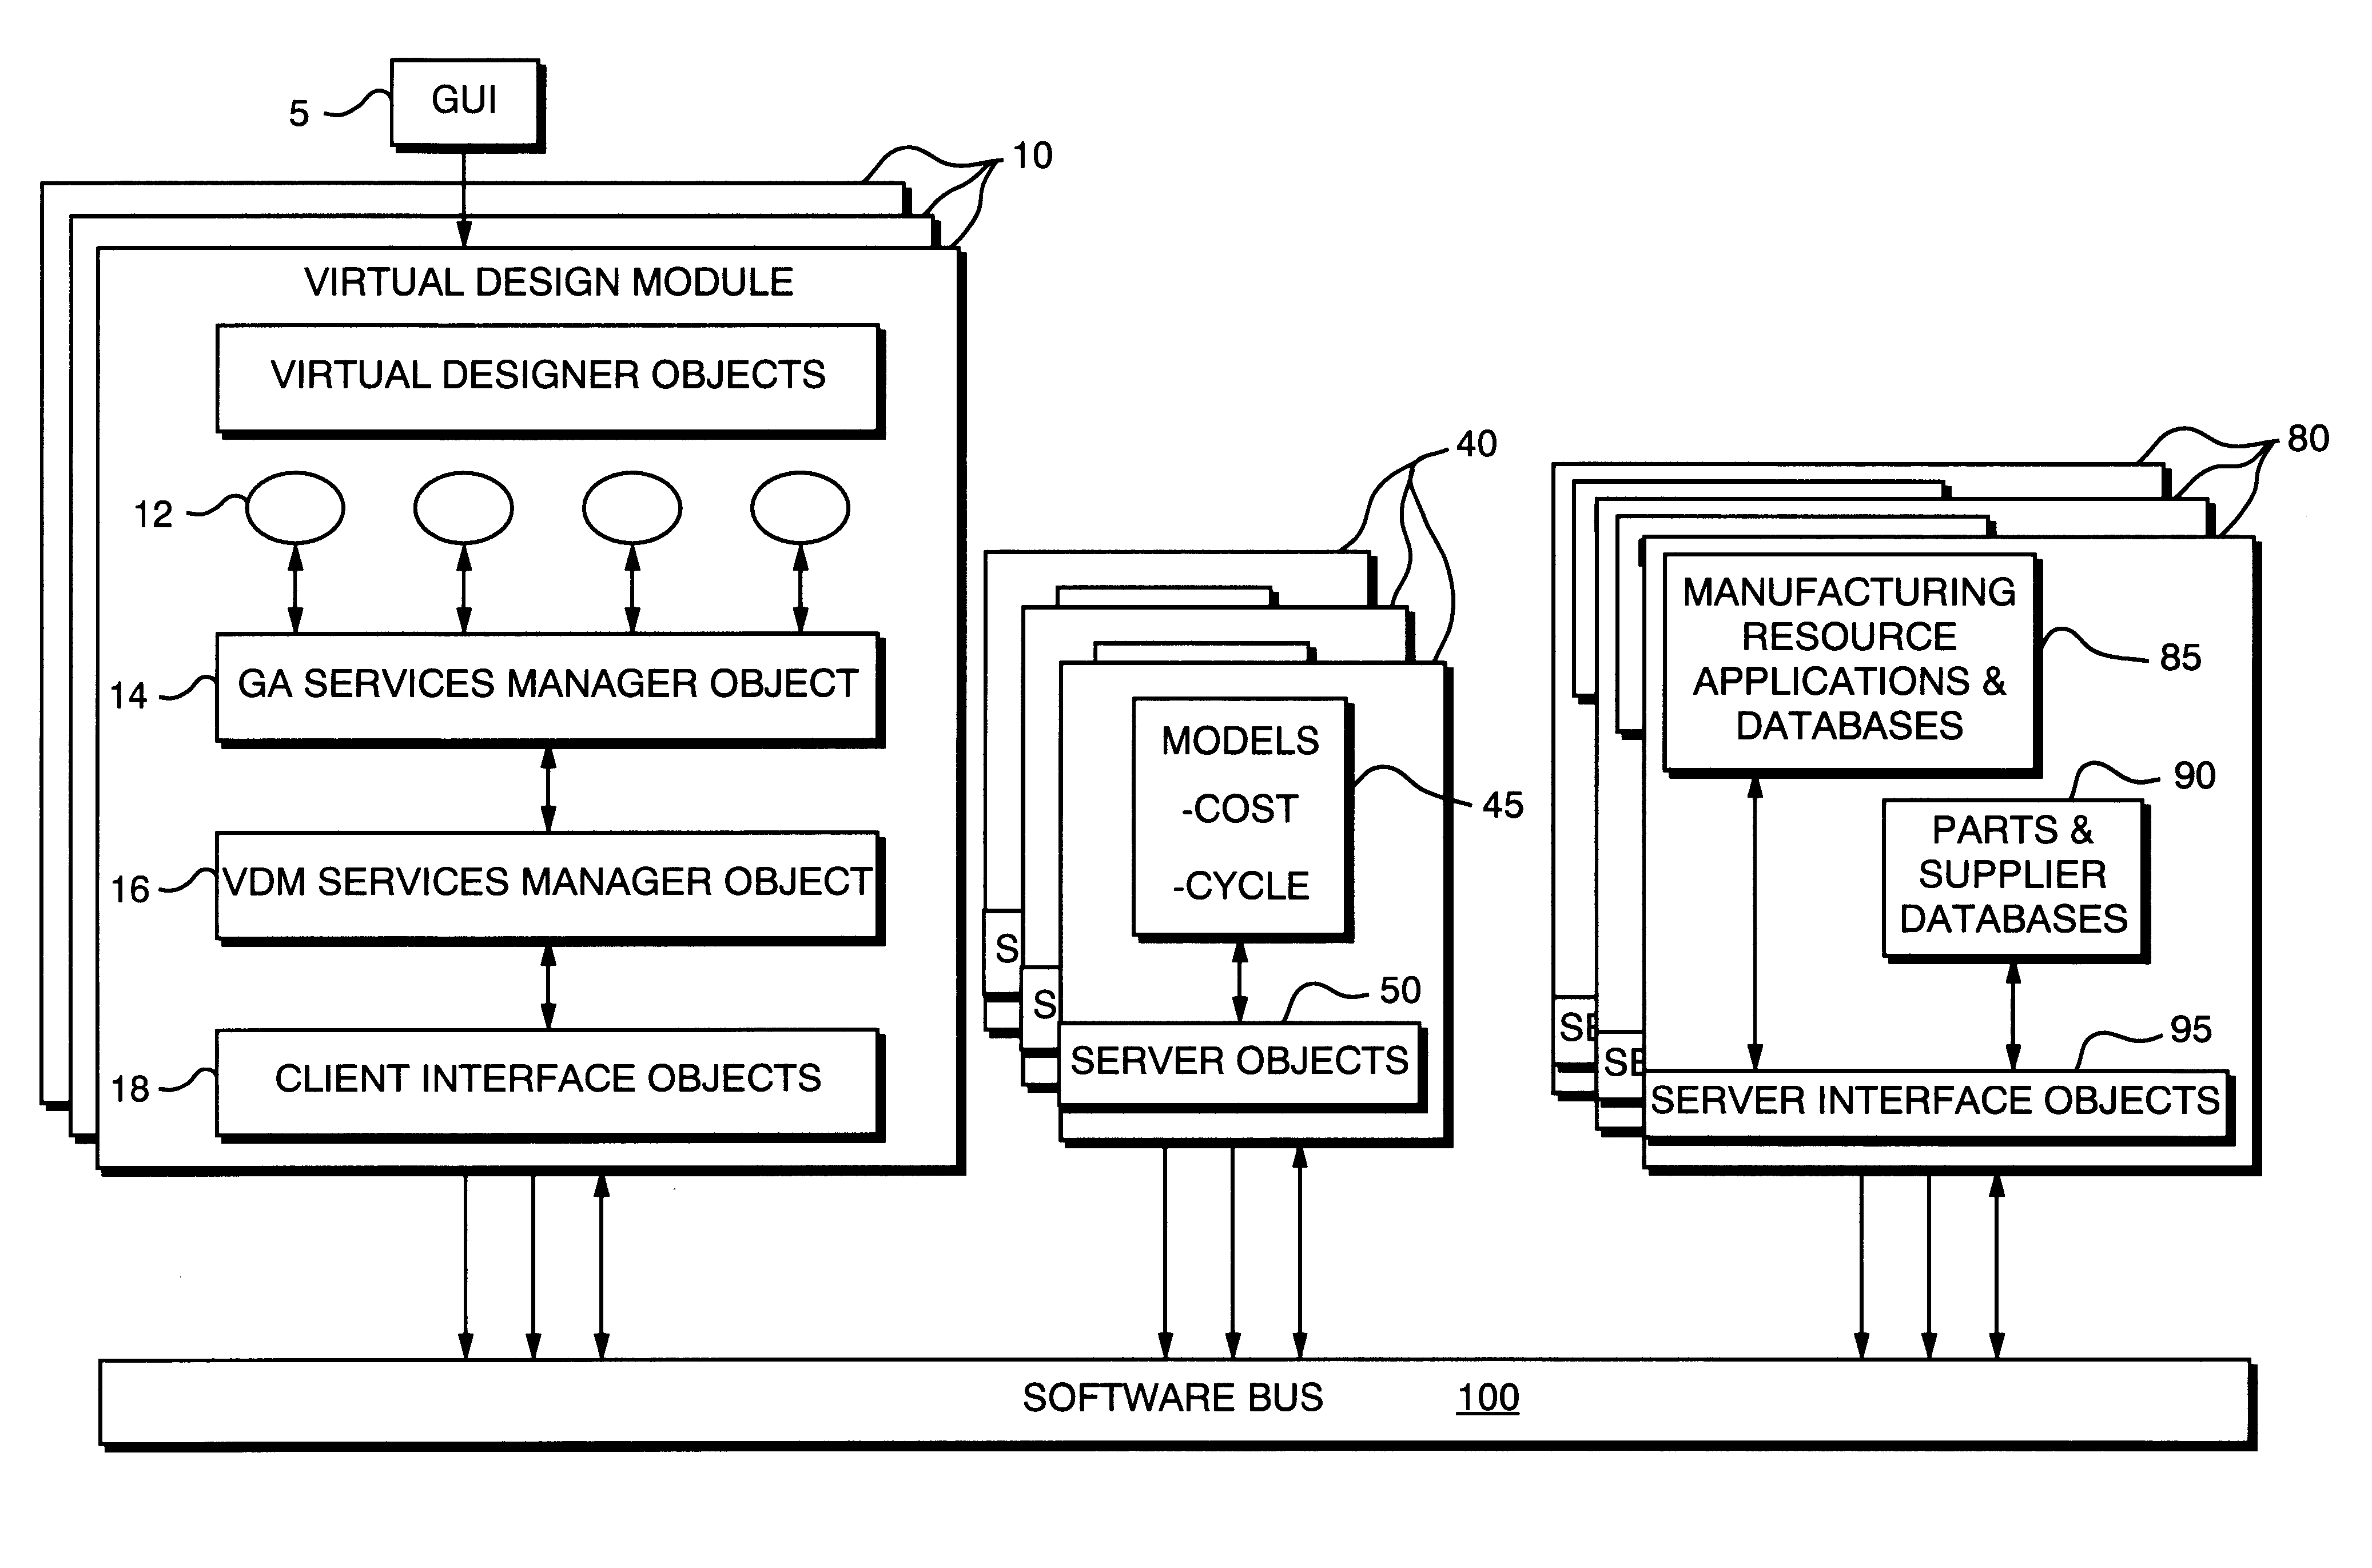 Virtual design module